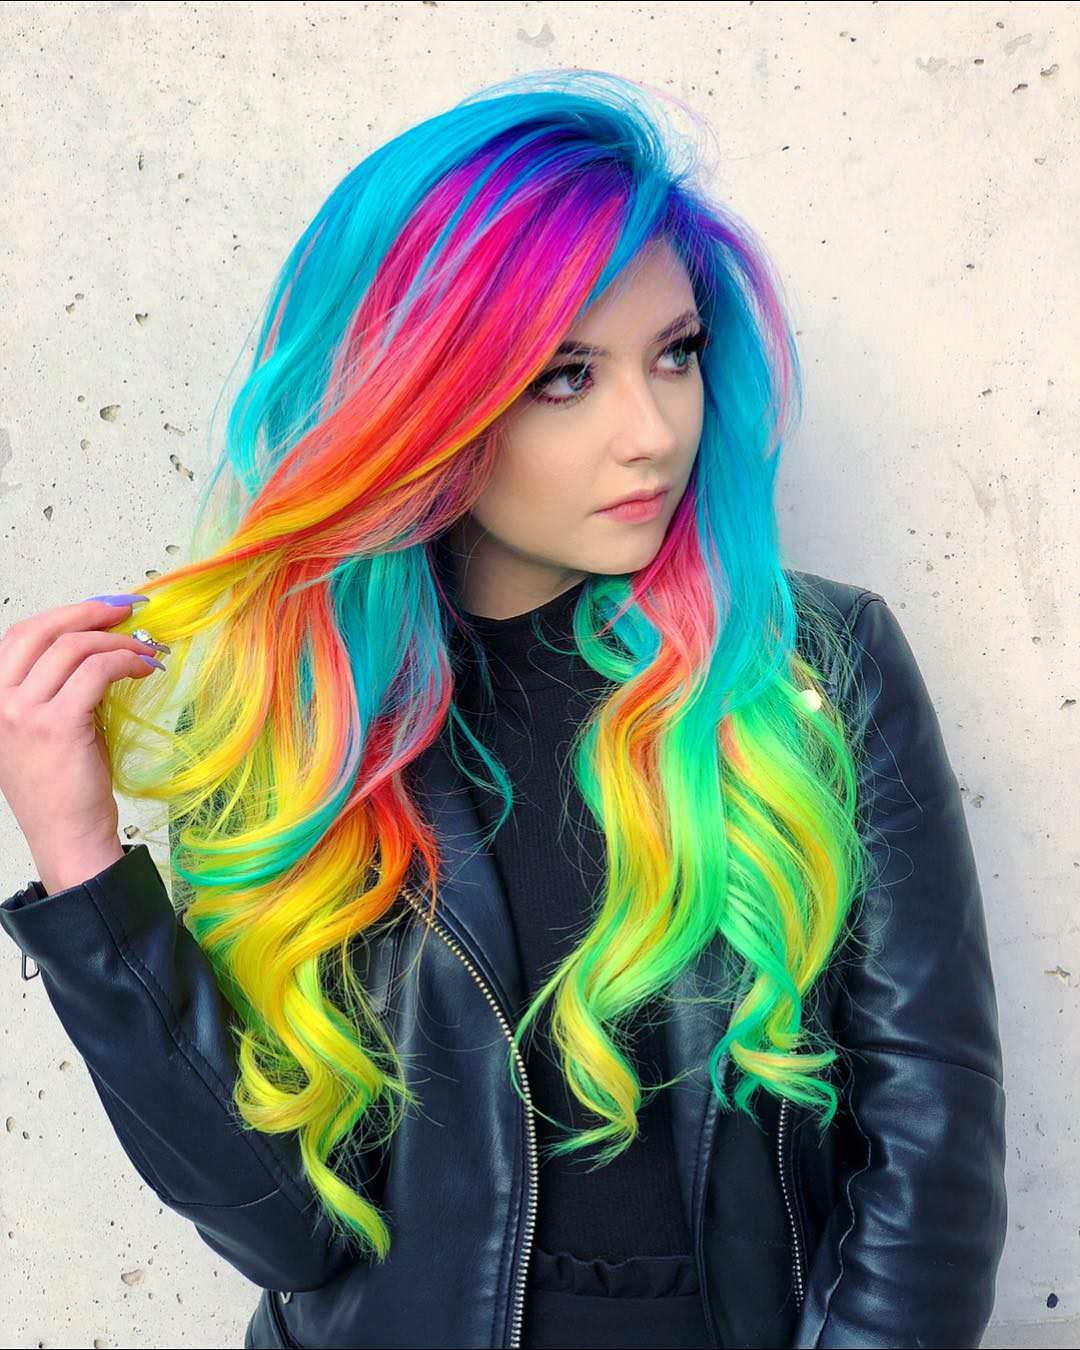 Покраска Волос Сочетание Цветов